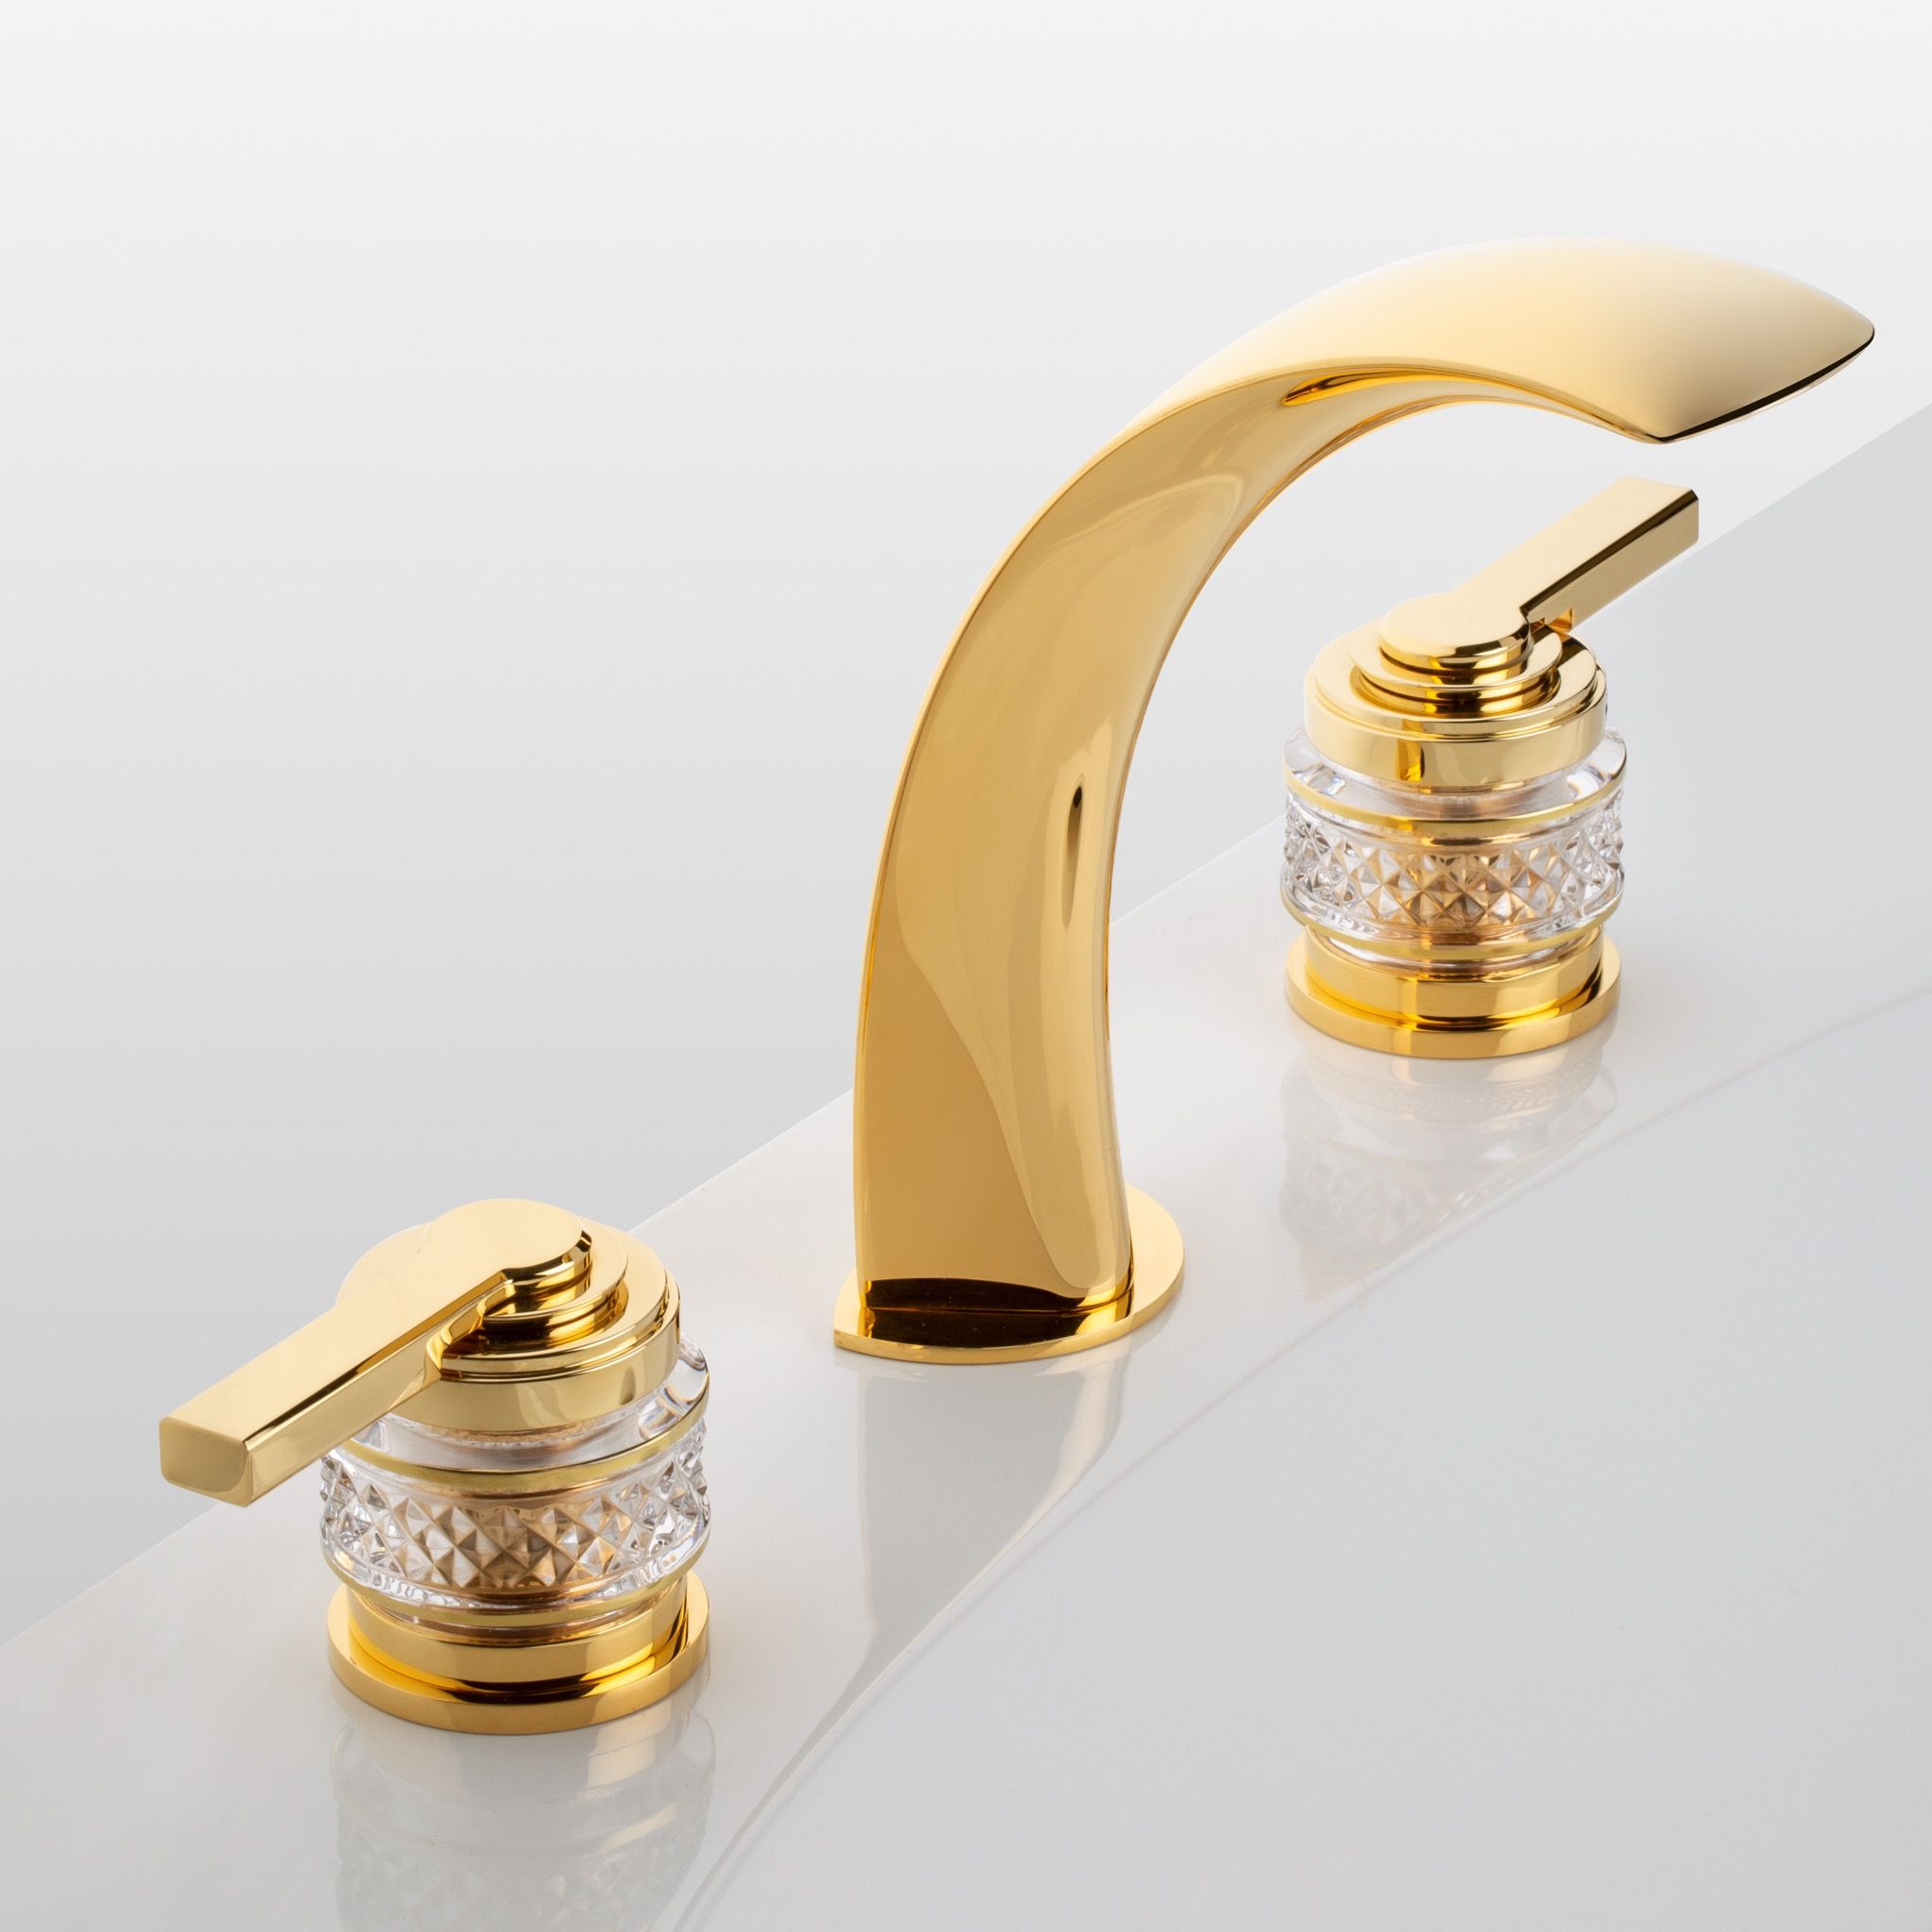  Vòi chậu rửa mặt cổ điển Quadrille Lever polished gold - 1301 